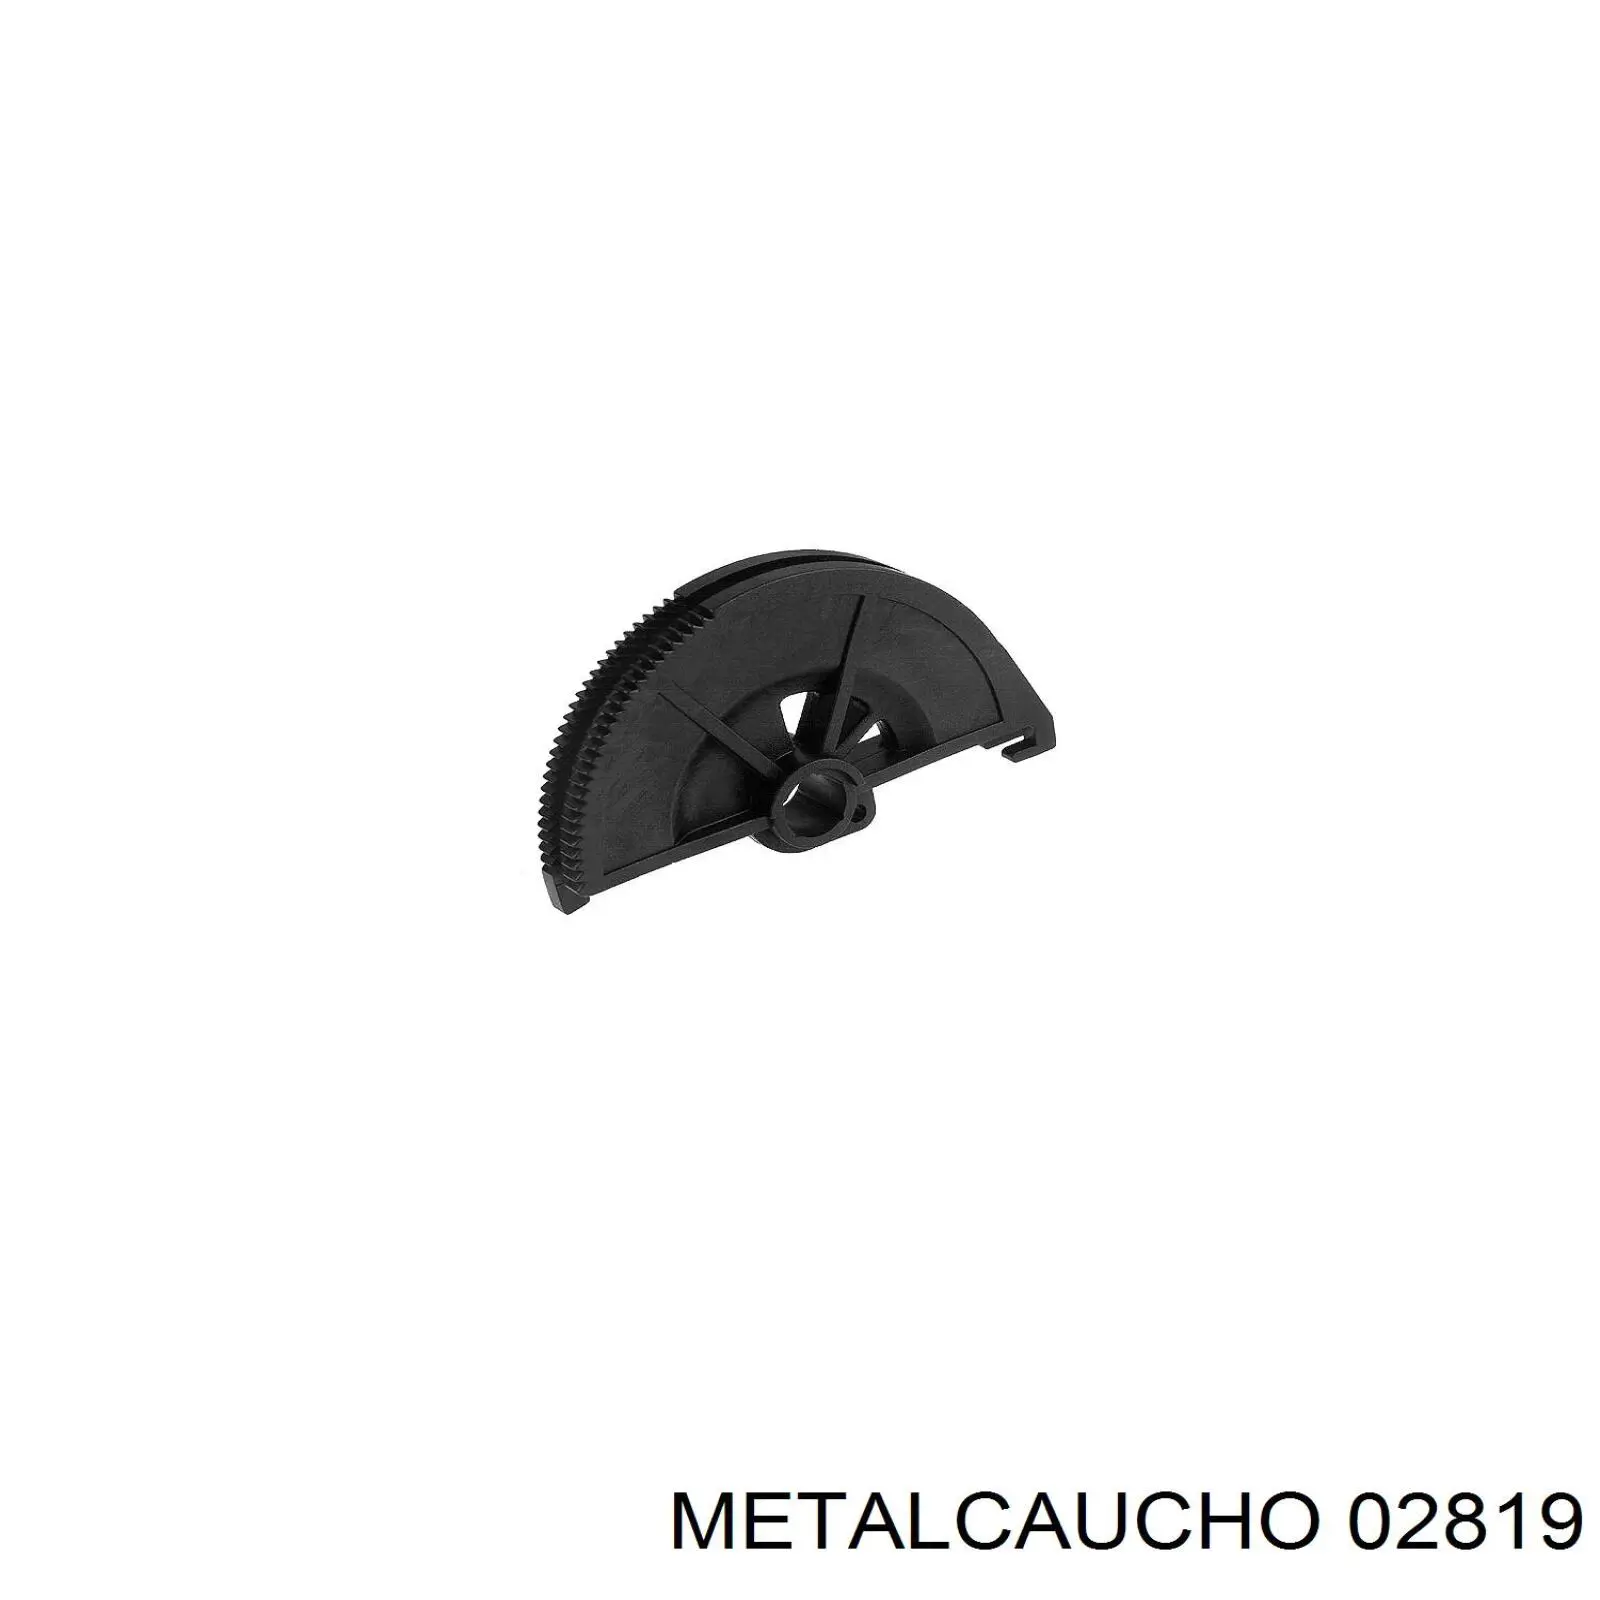 02819 Metalcaucho ремкомплект сектора привода сцепления